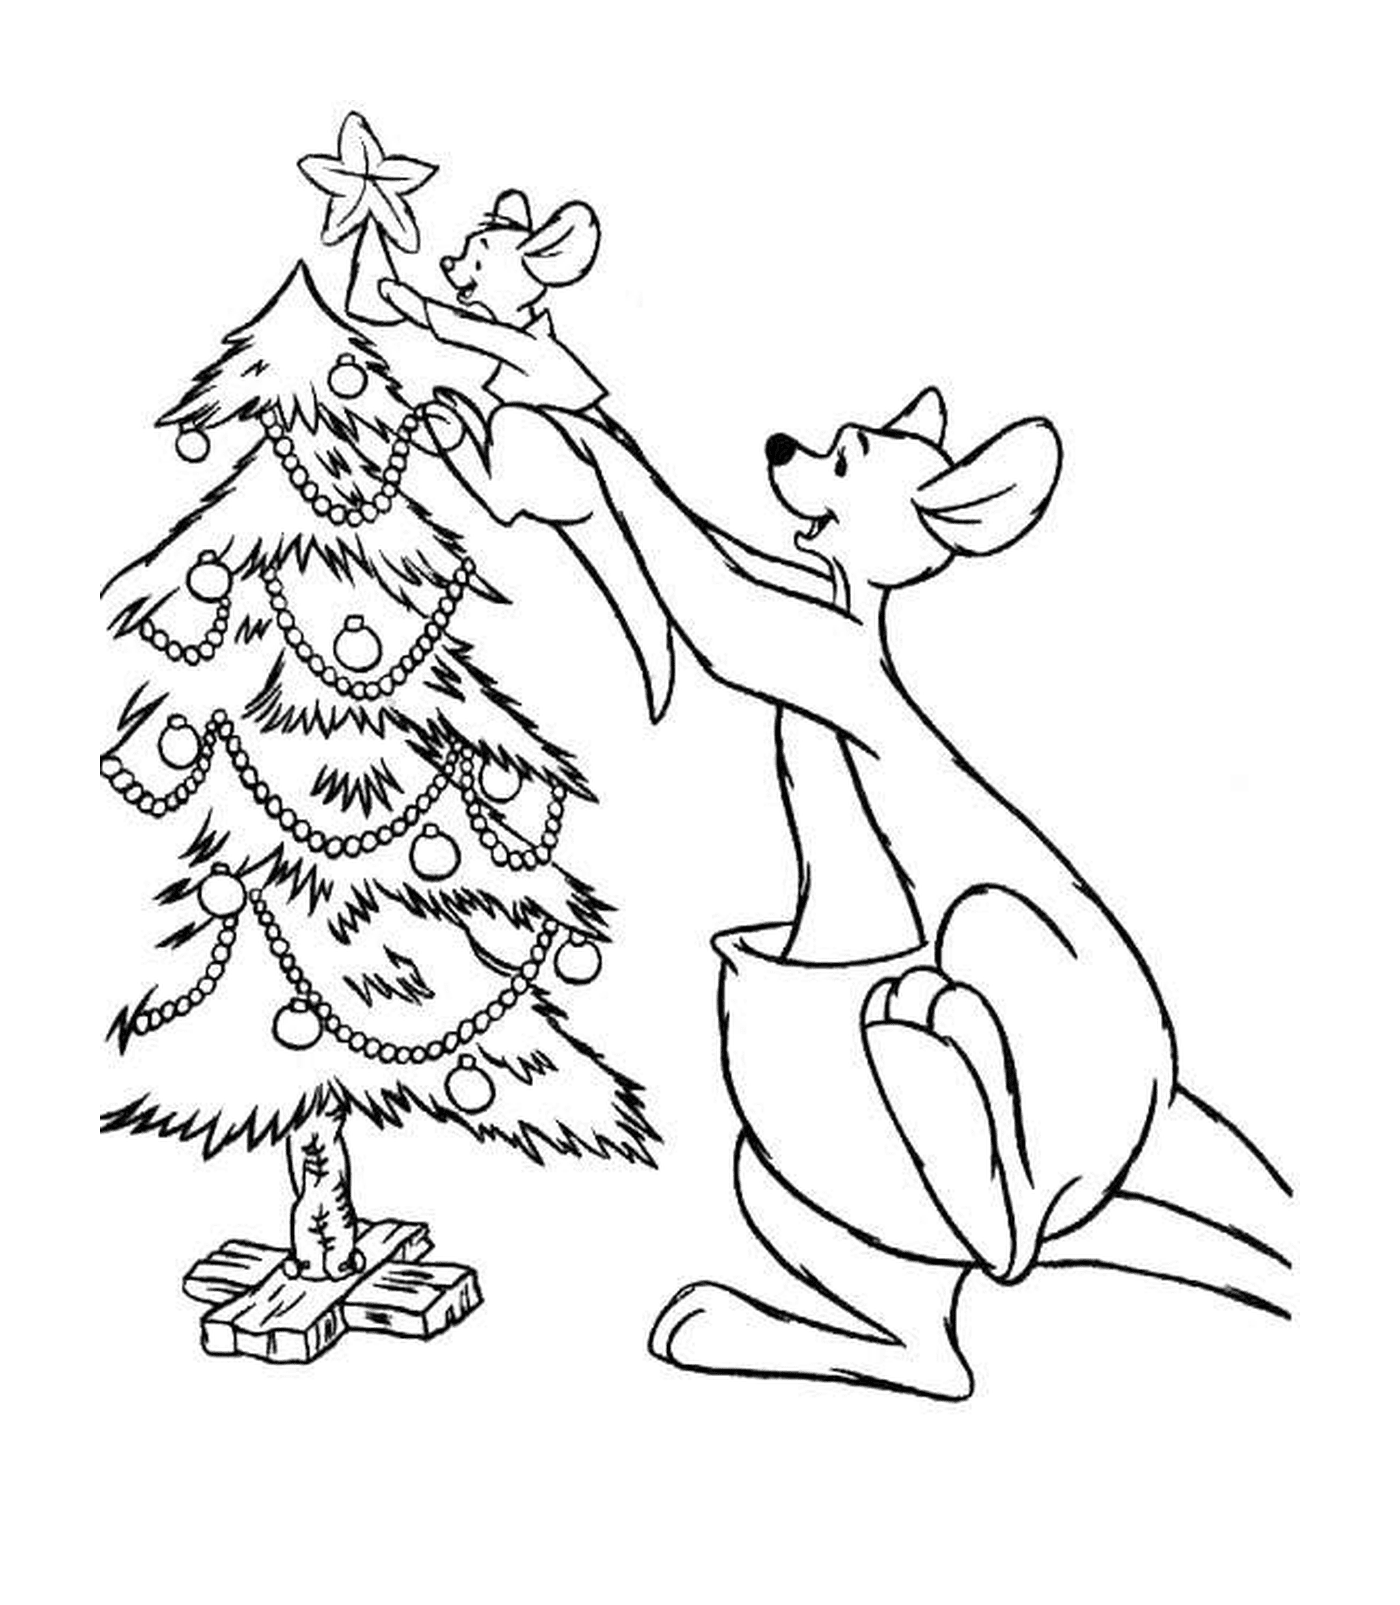  Dog decorates Christmas tree 